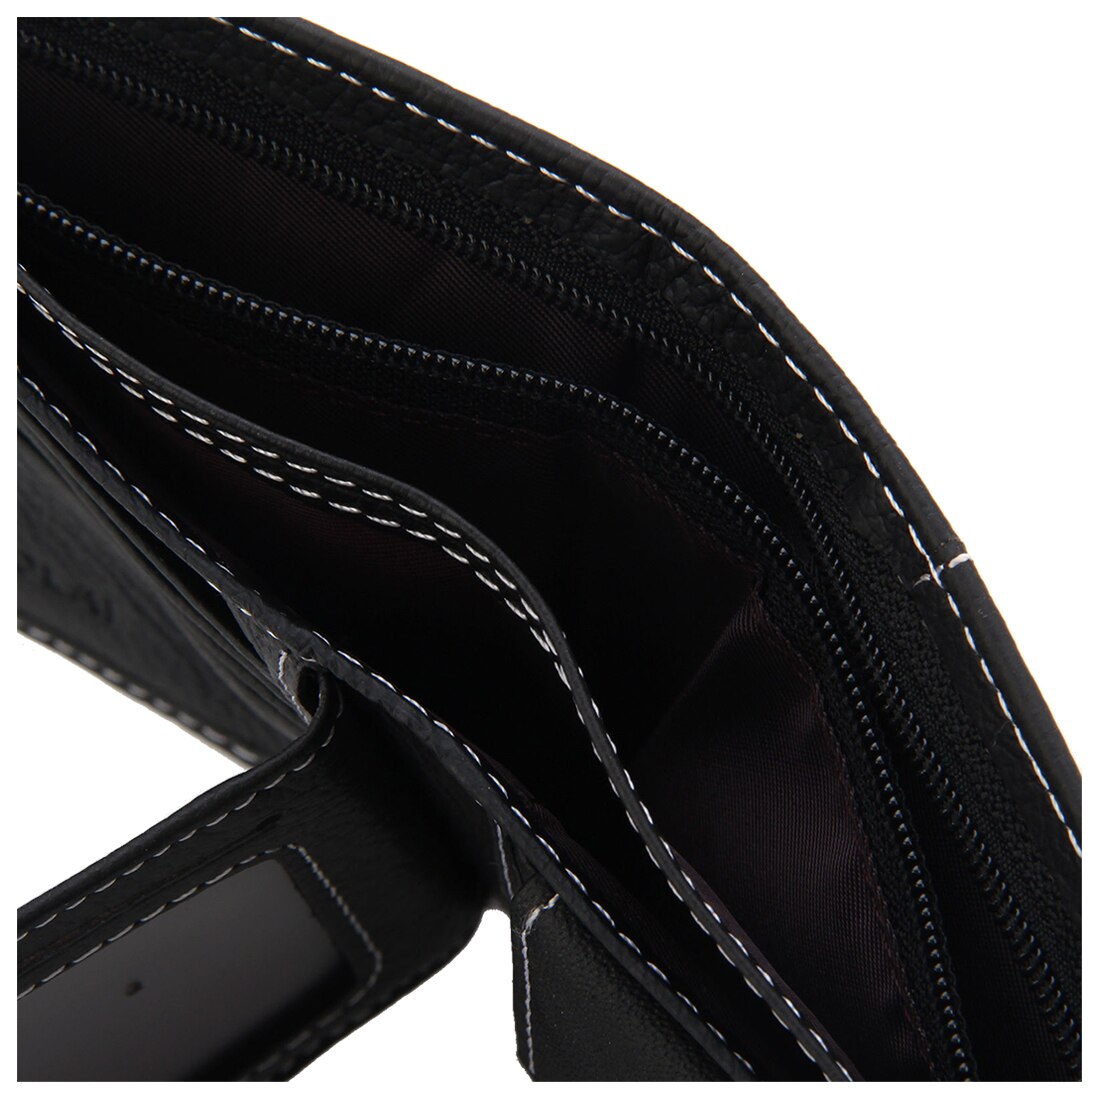 JINBAOLAI Black Mens Luxury Soft Business Leather Bifold Wallet Credit Card Holder Purse - ebowsos